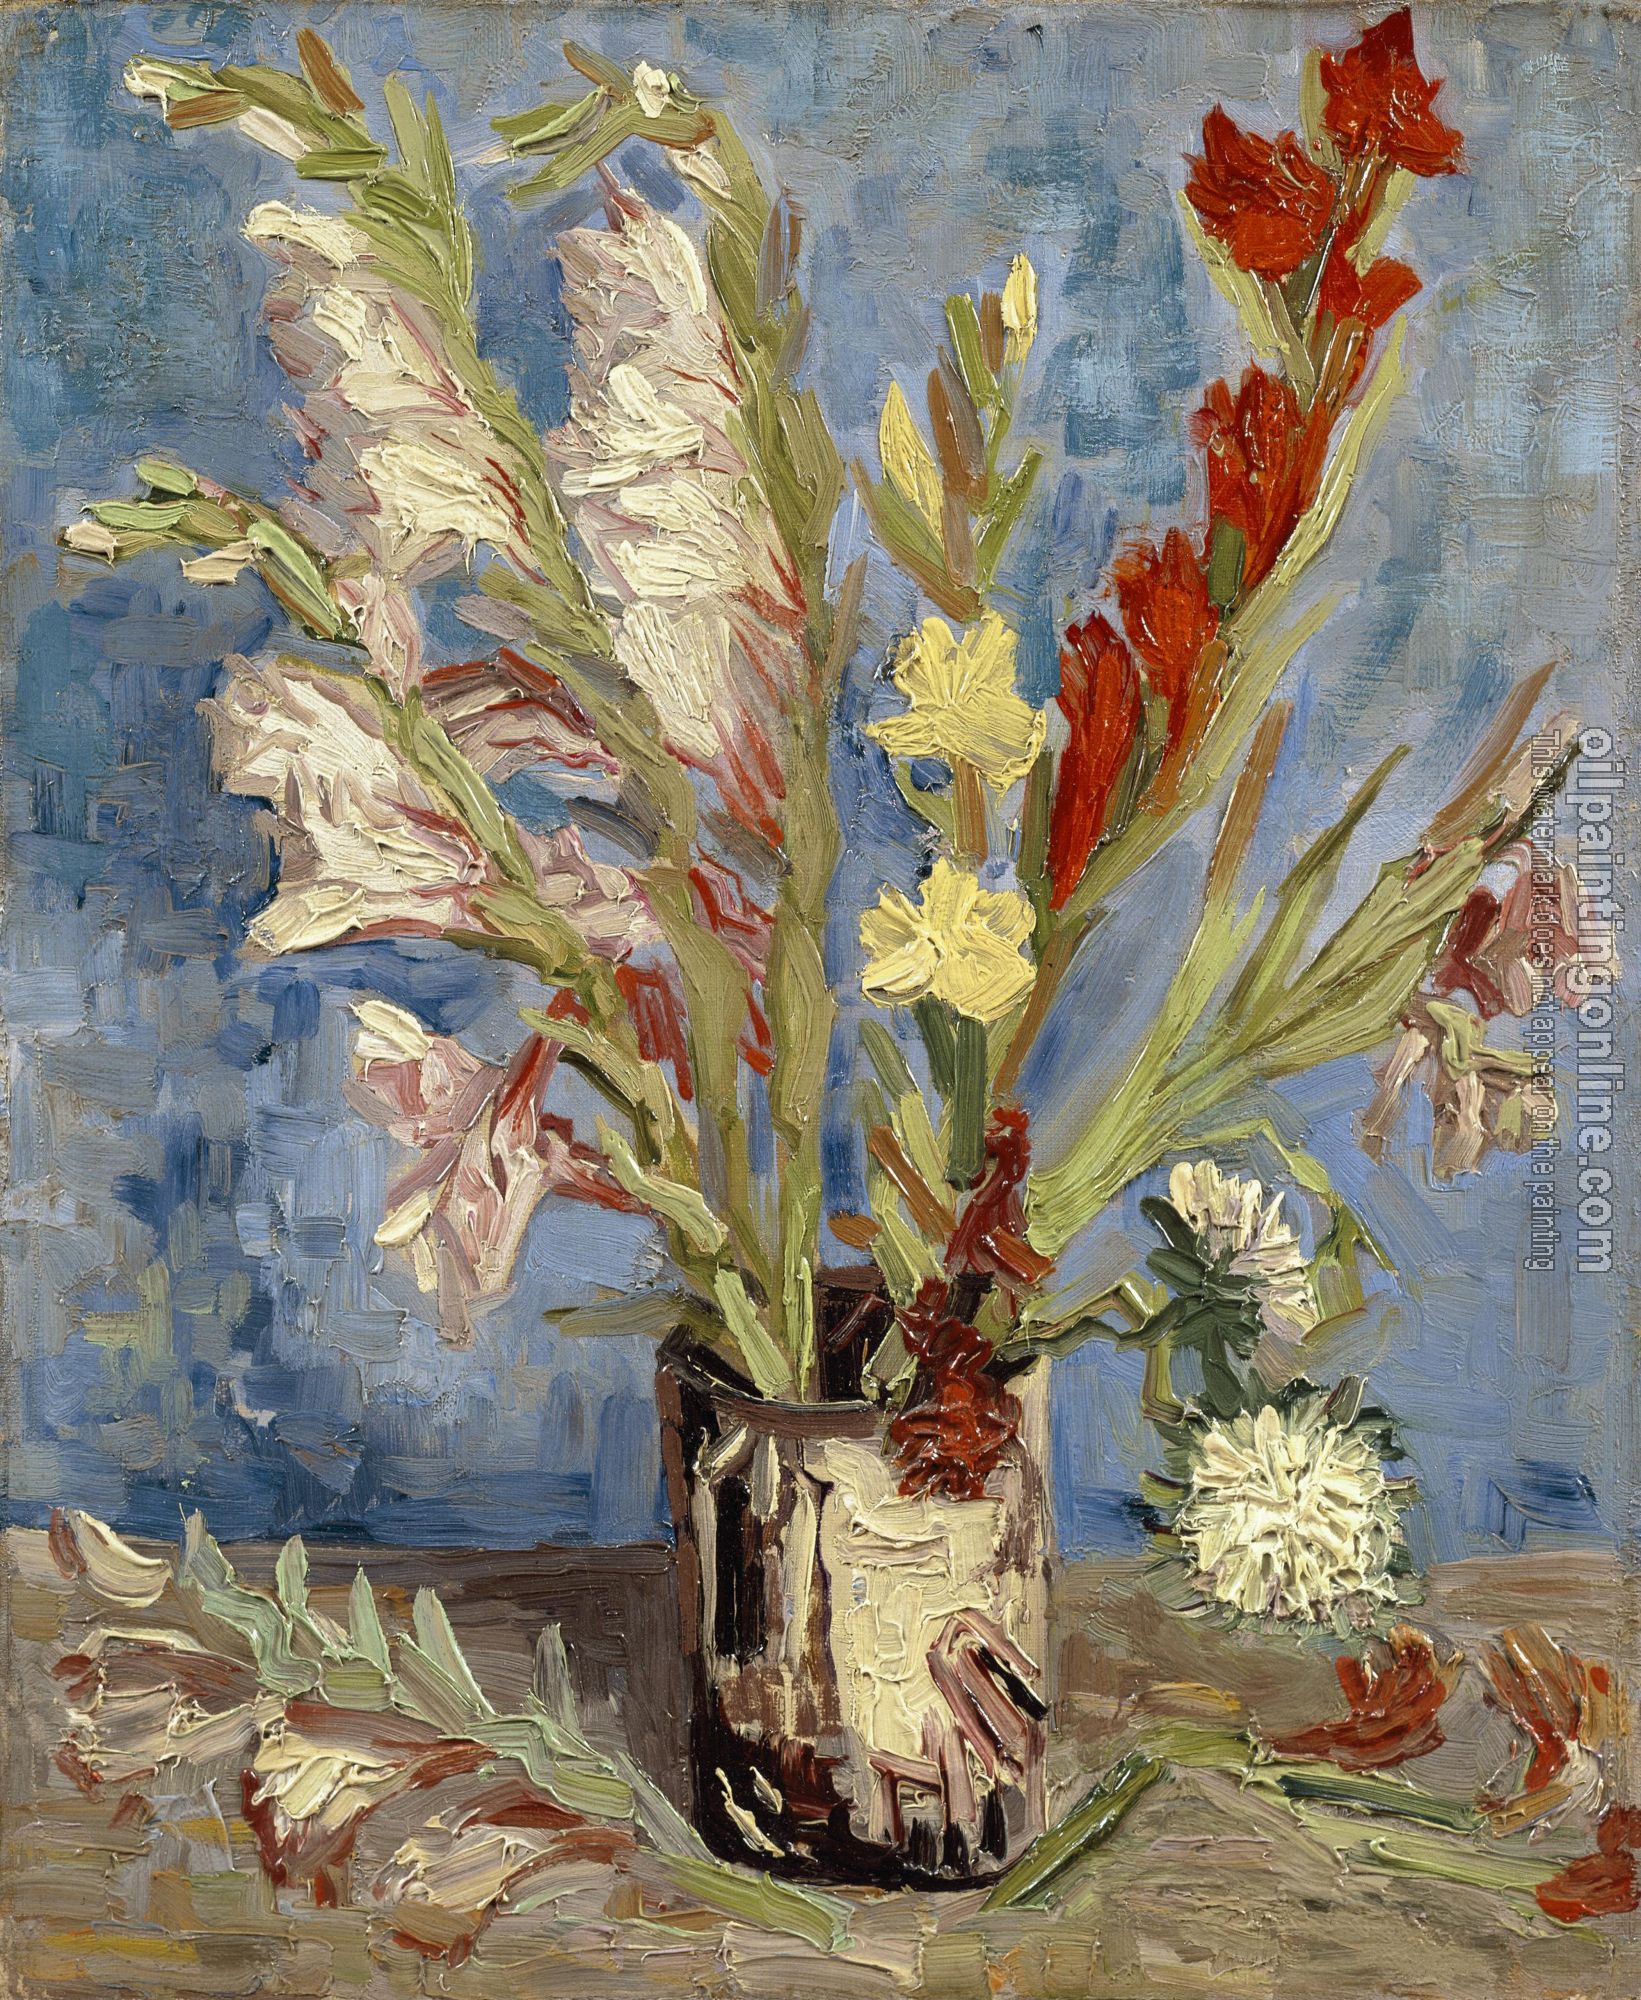 Gogh, Vincent van - Vase with Gladioli